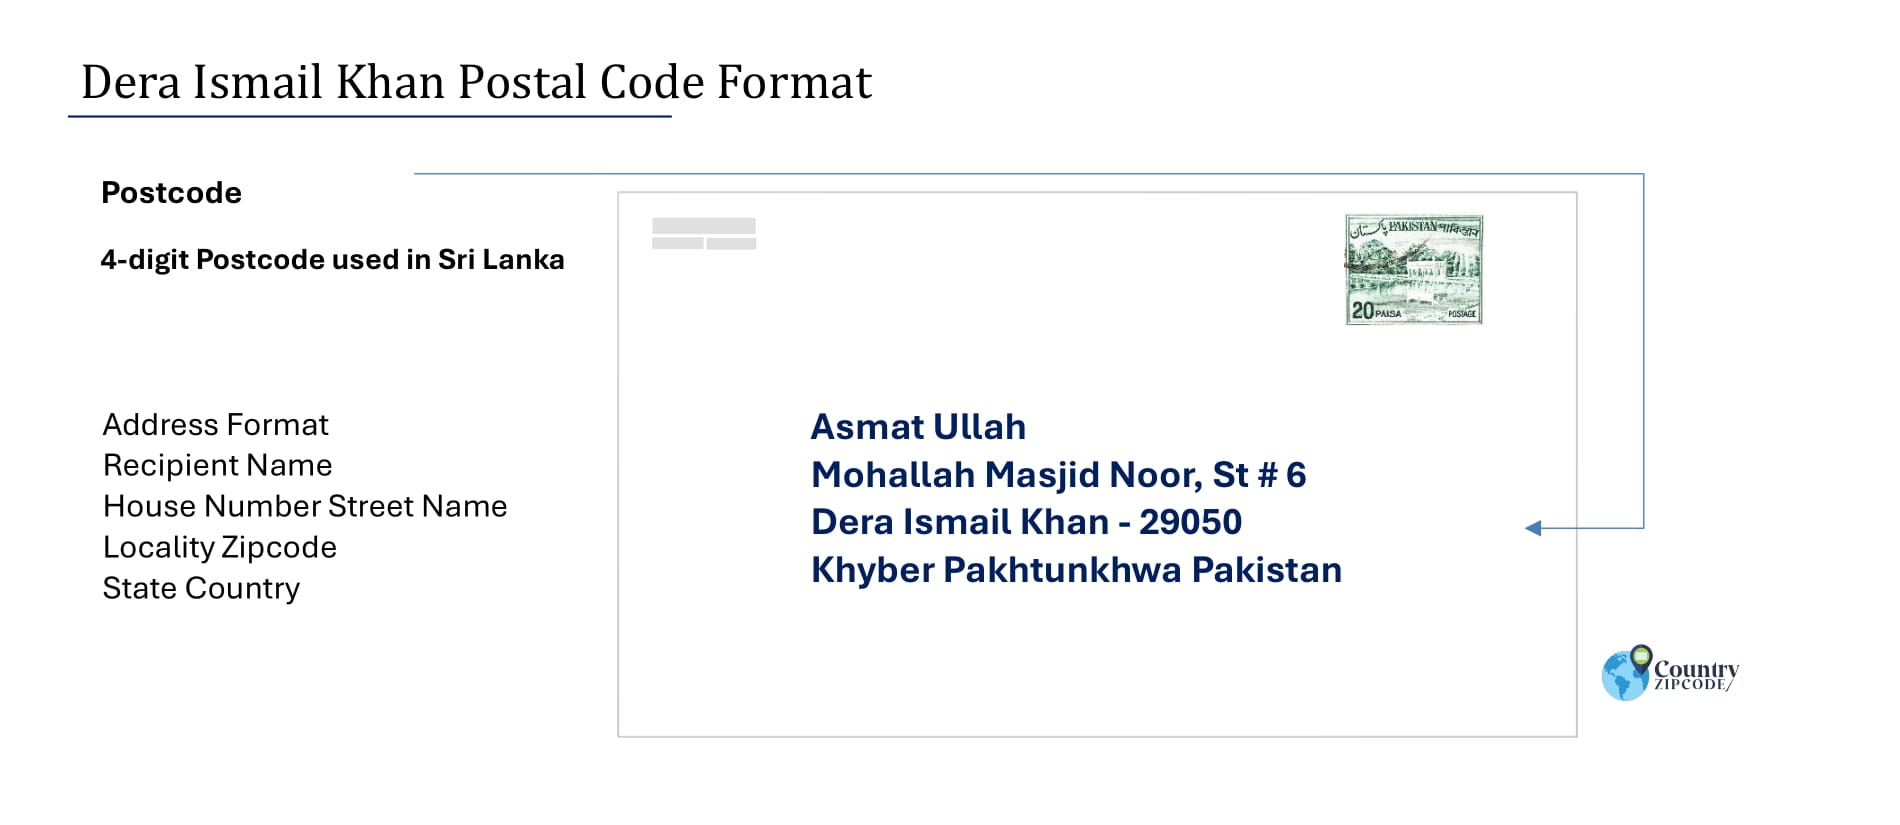 Example of Dera Ismail Khan Pakistan Postal code and Address format